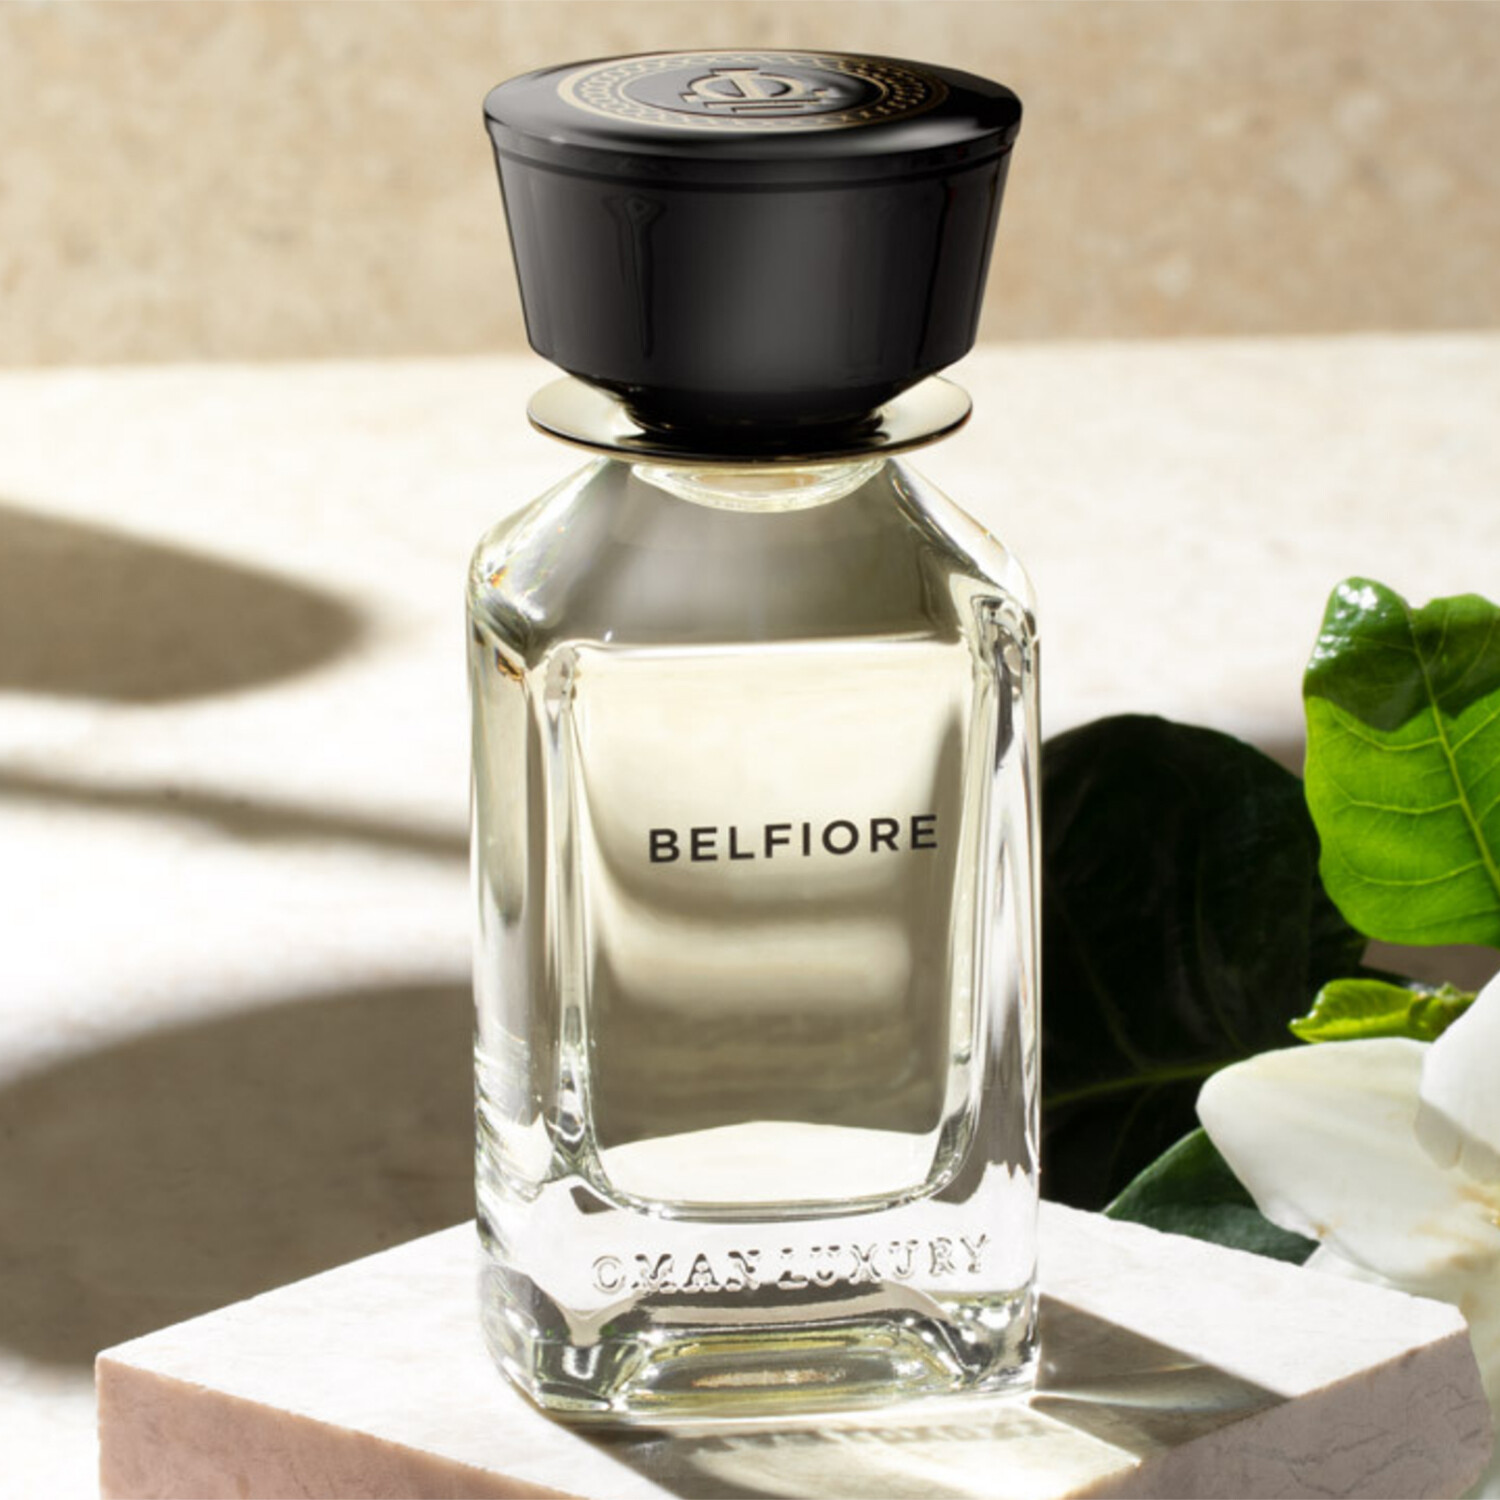 Oman Luxury Belfiore Perfume